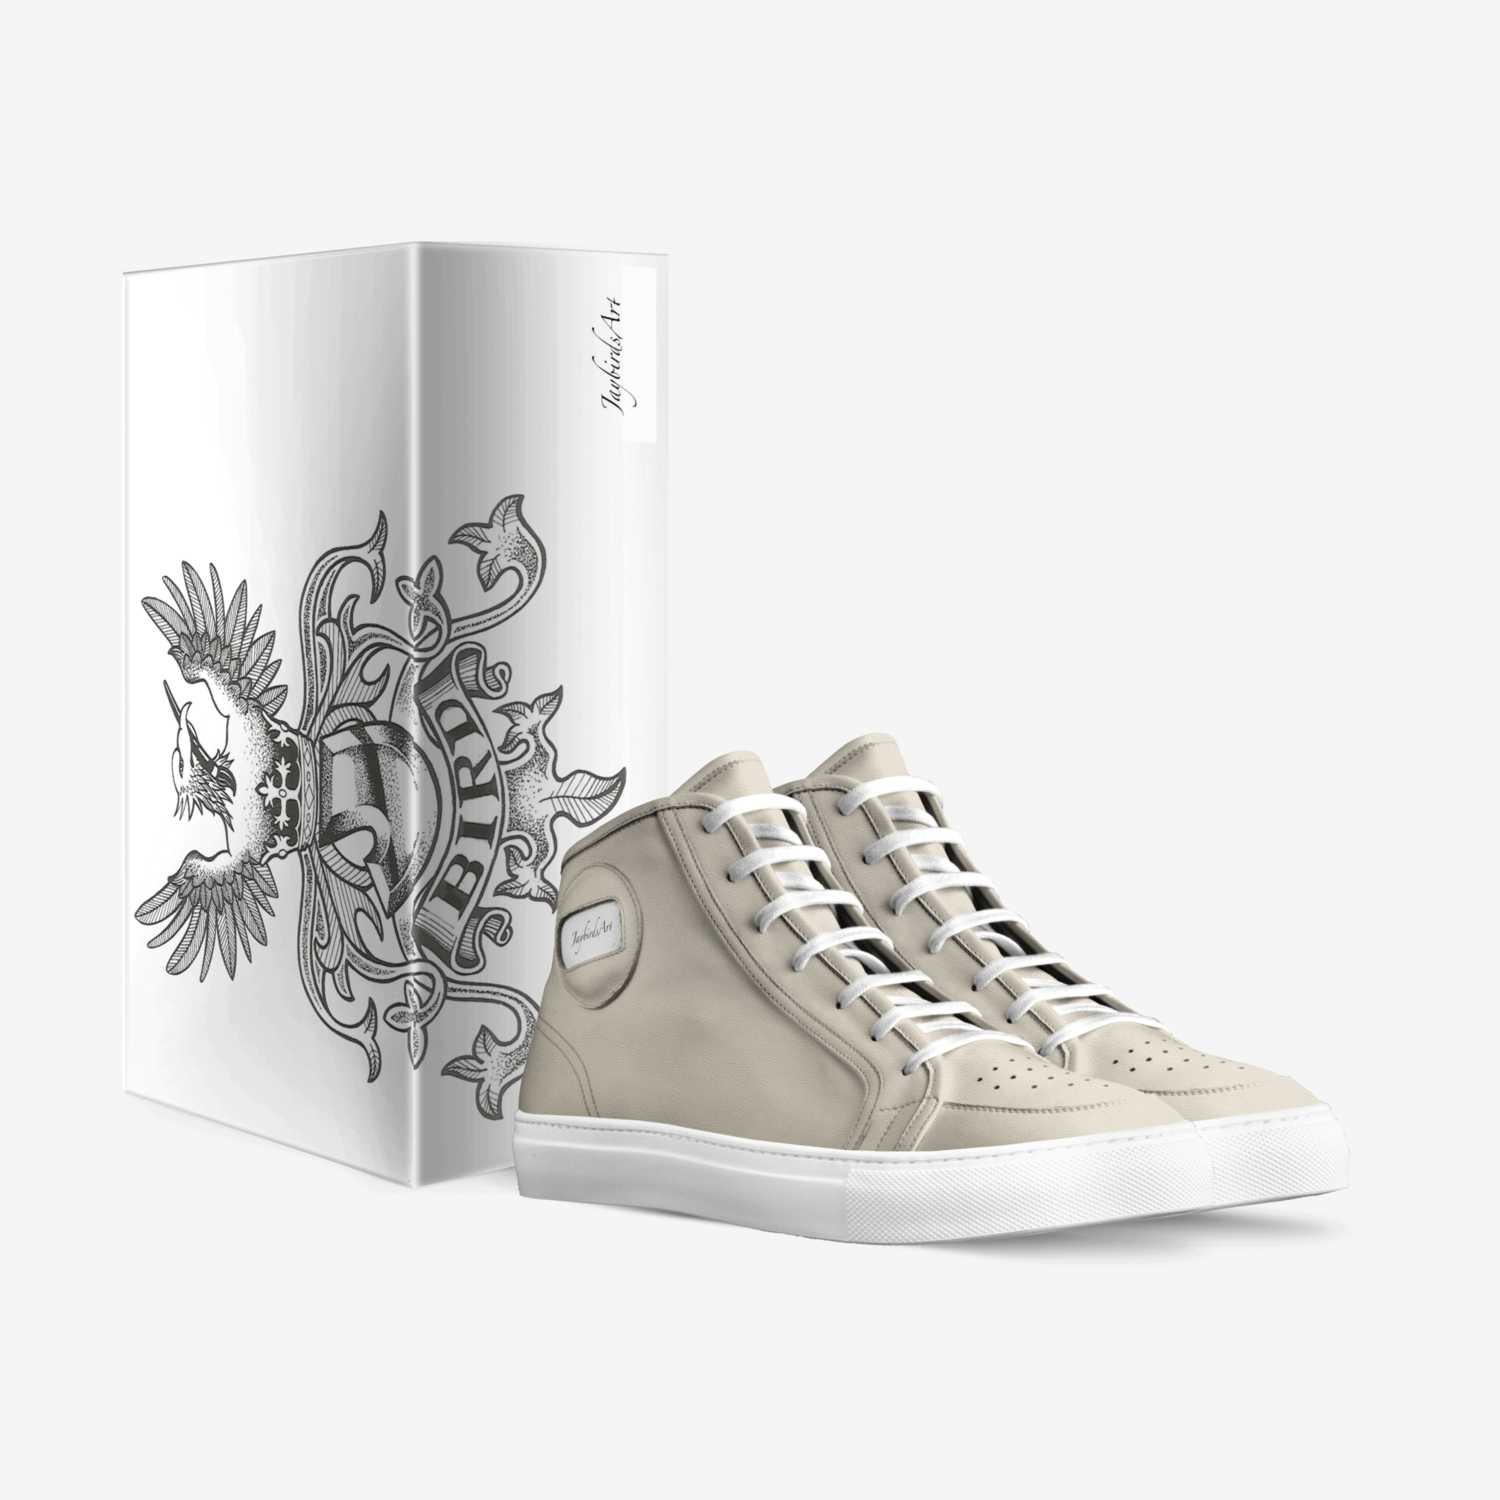 JaybirdsArt custom made in Italy shoes by Jaleel Davis | Box view